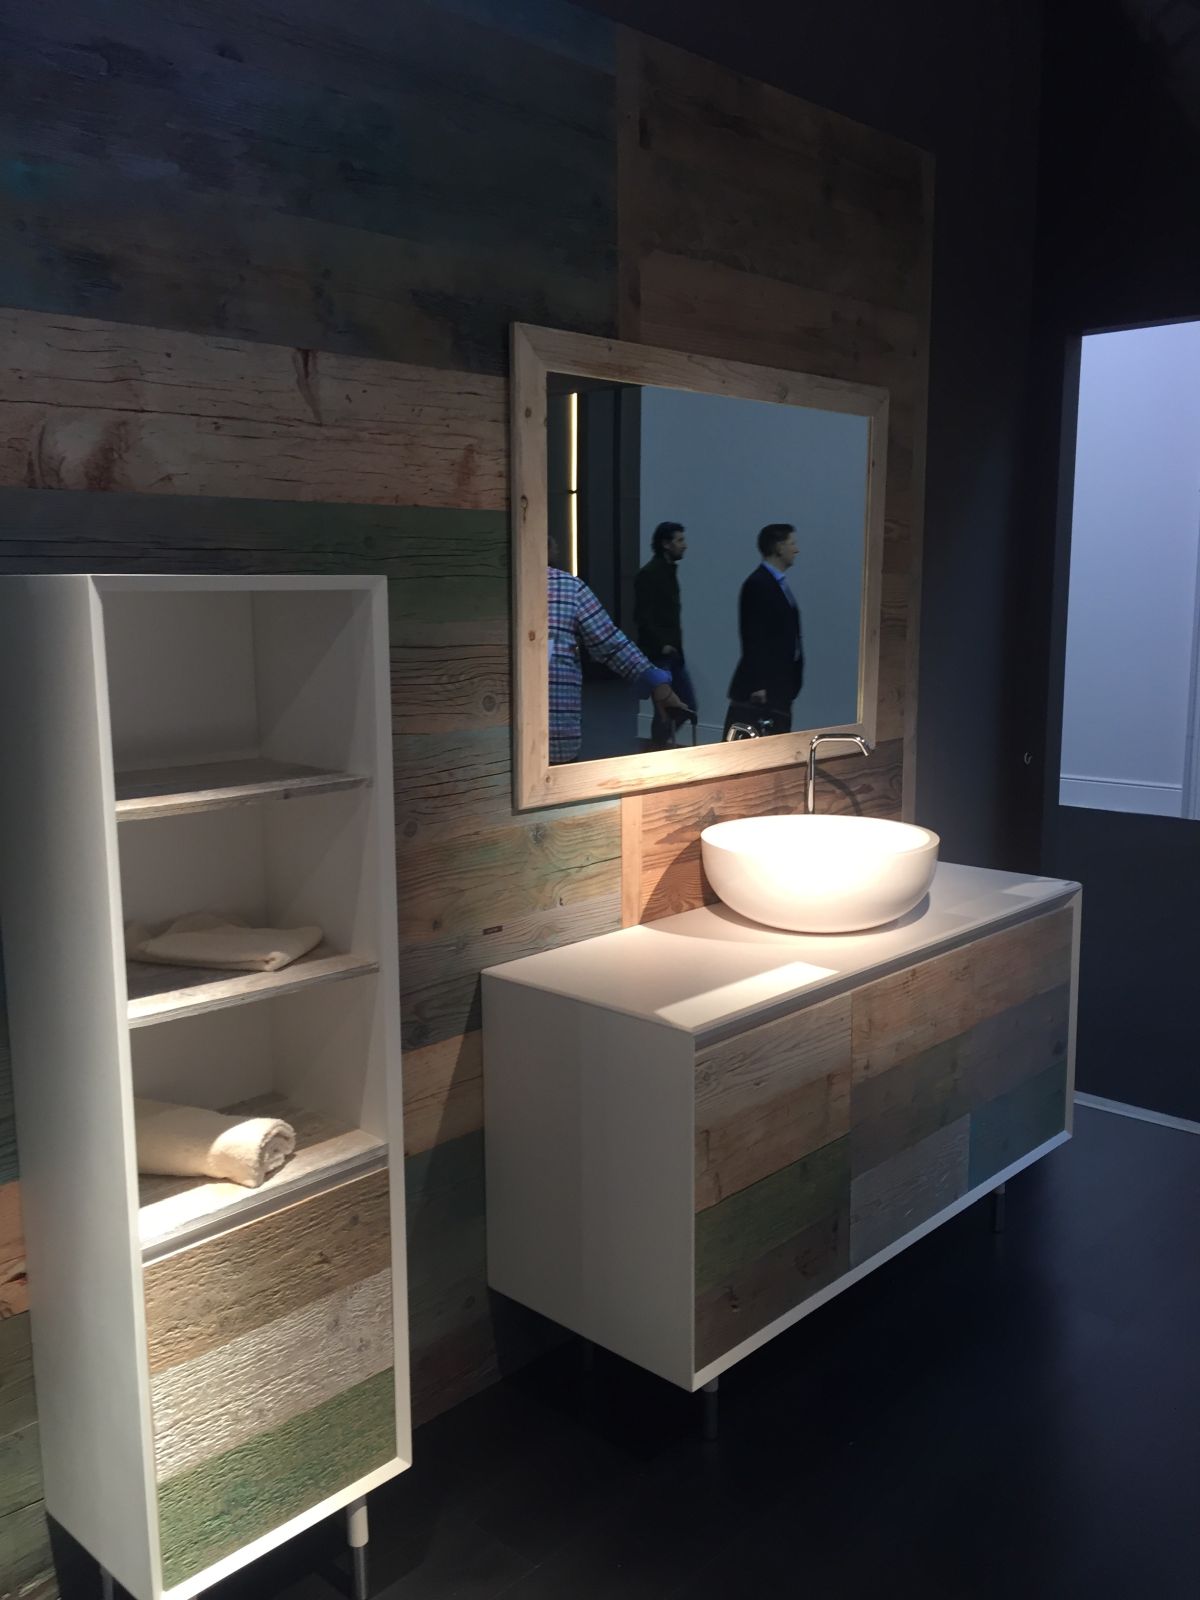 Reclaimed wood turned into luxury wood for bathroom furniture